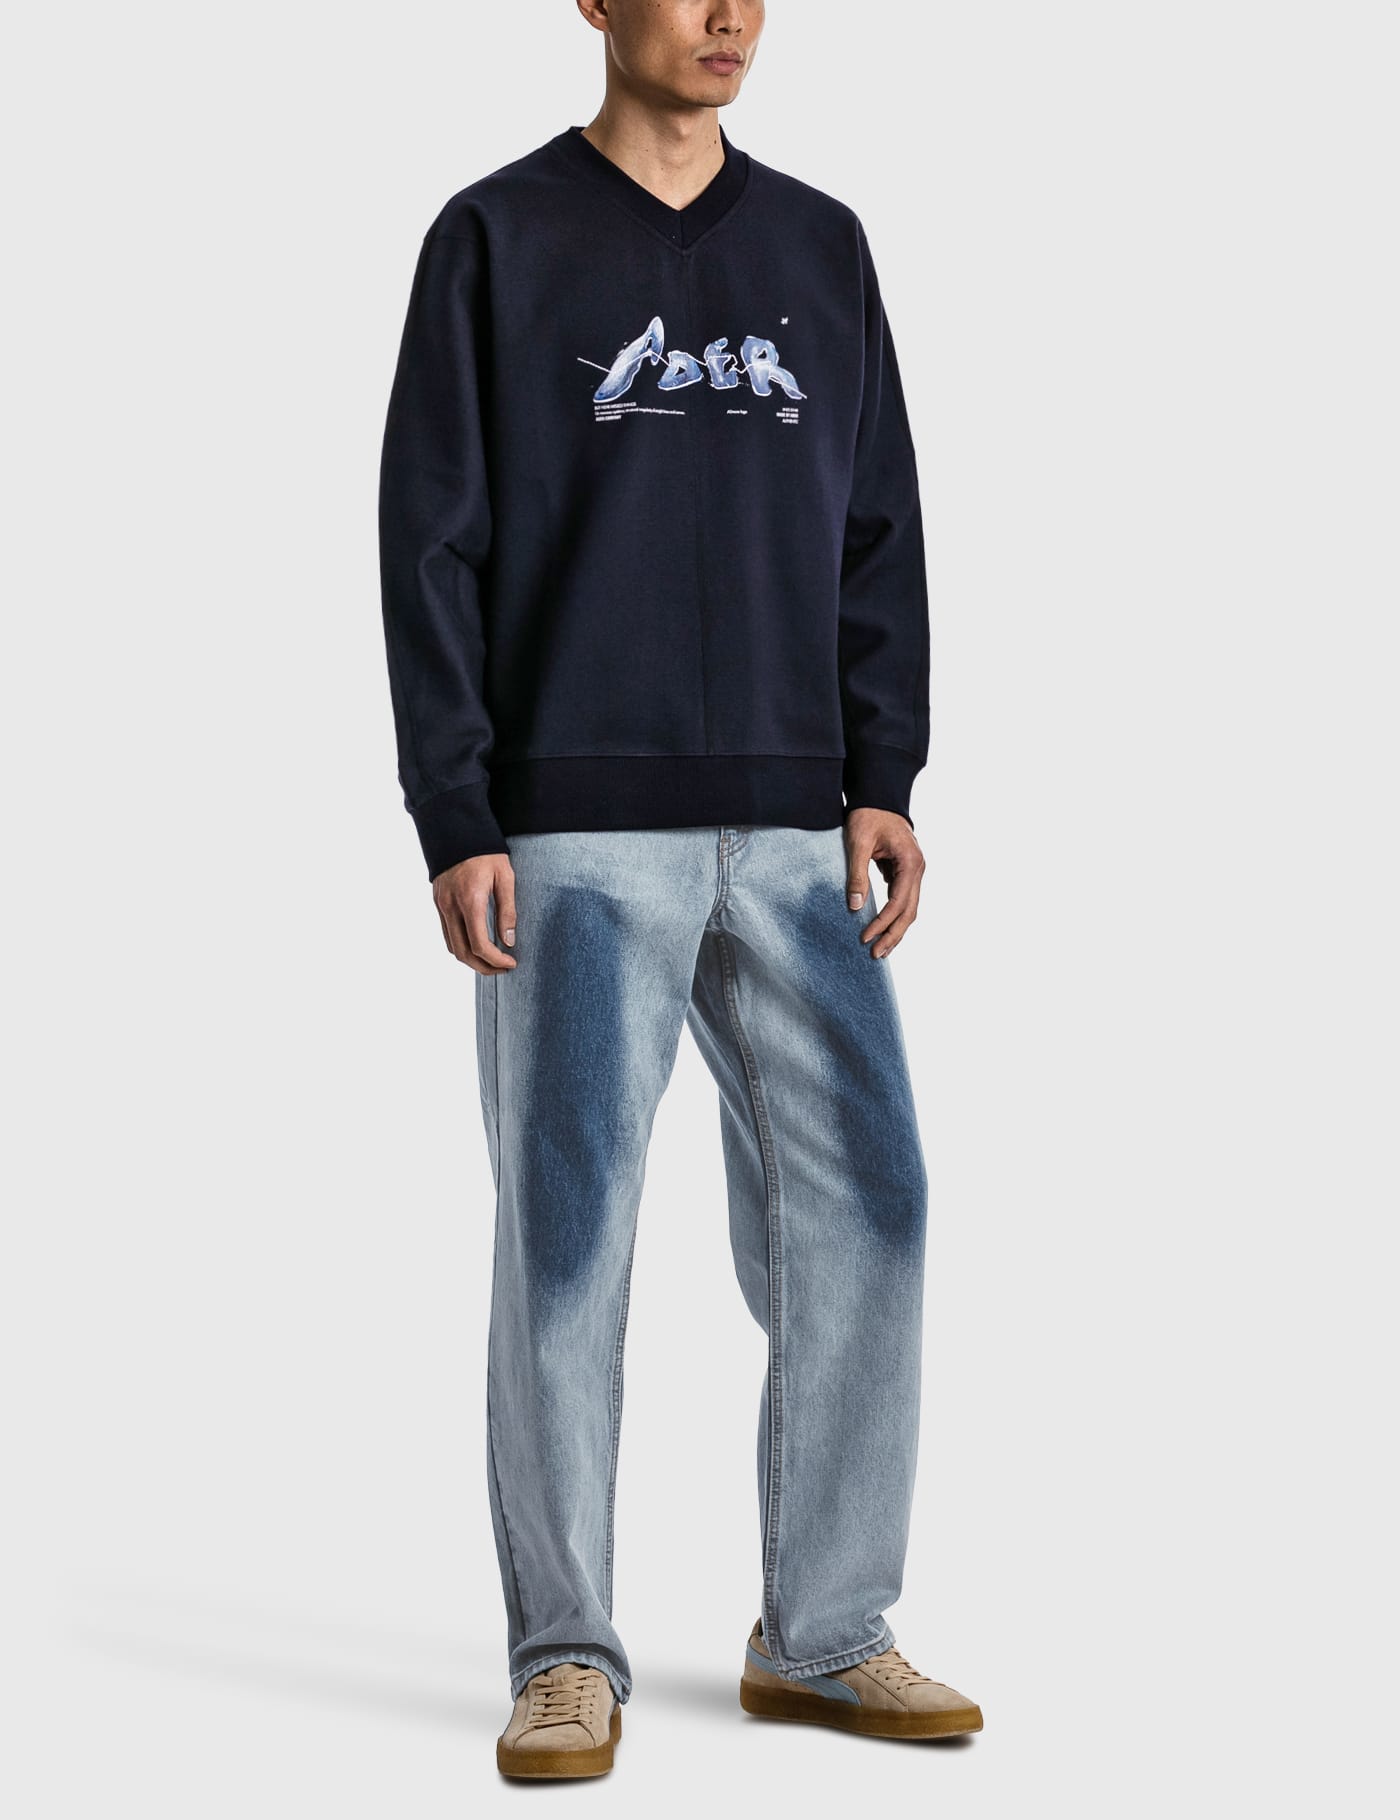 Ader Error - Admore Sweatshirt | HBX - Globally Curated Fashion 